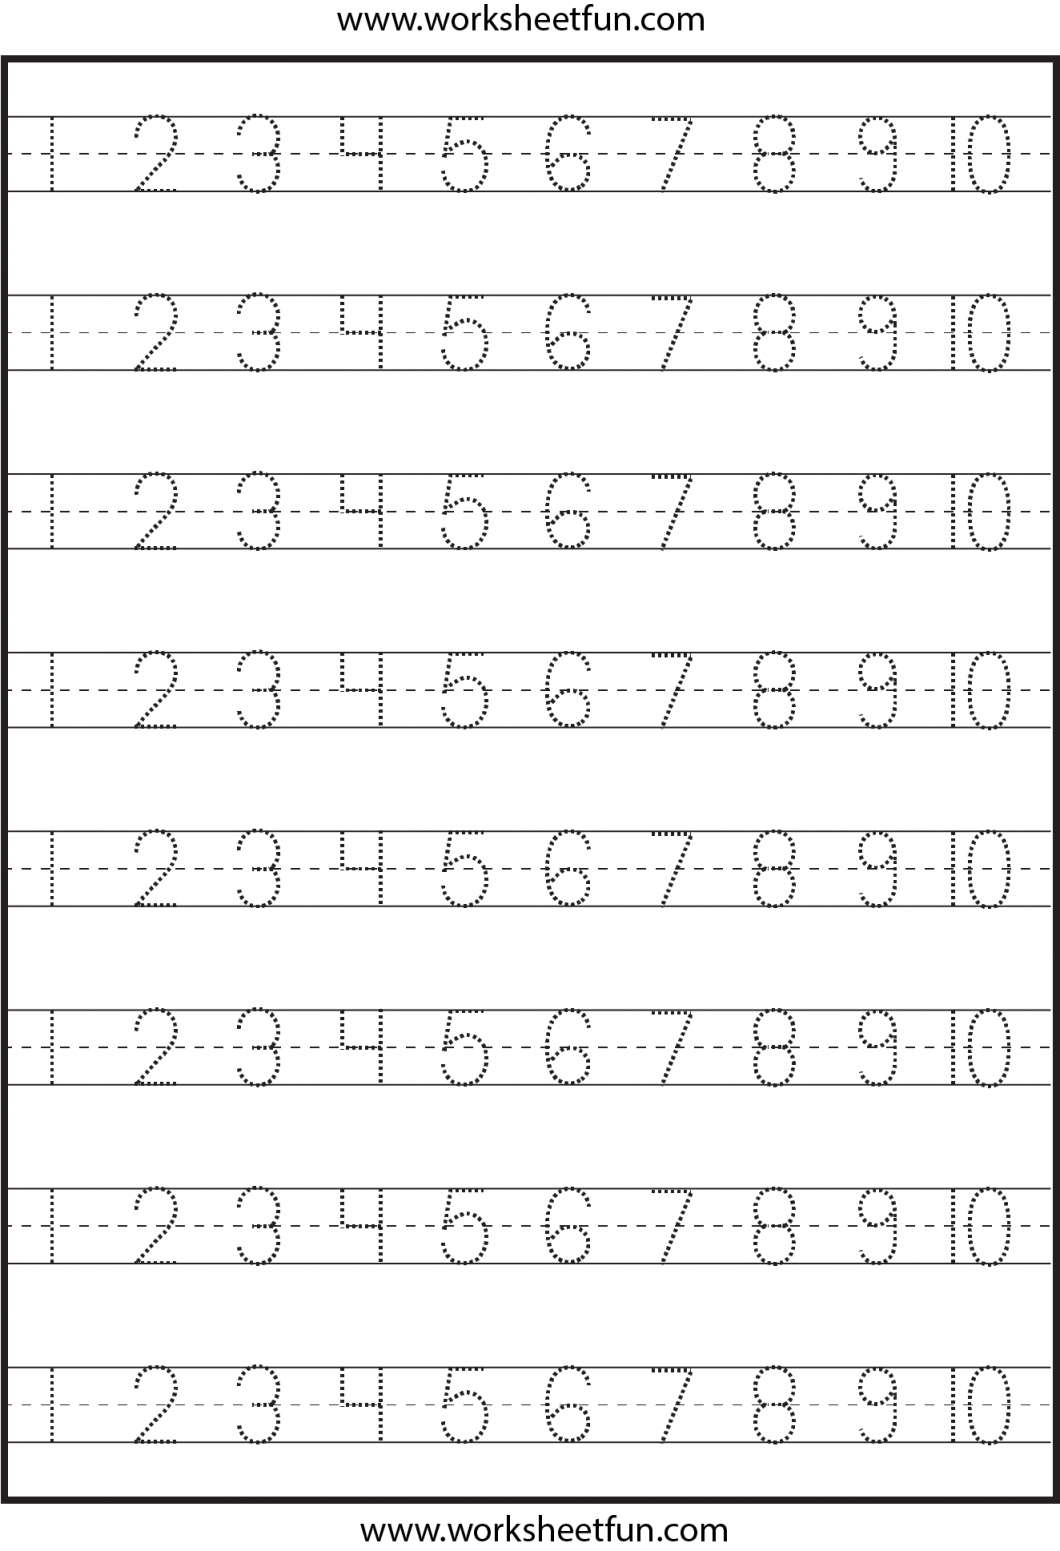 Free Printable Pre K Worksheets – With Printouts For Kindergarten - Free Printable Math Workbooks